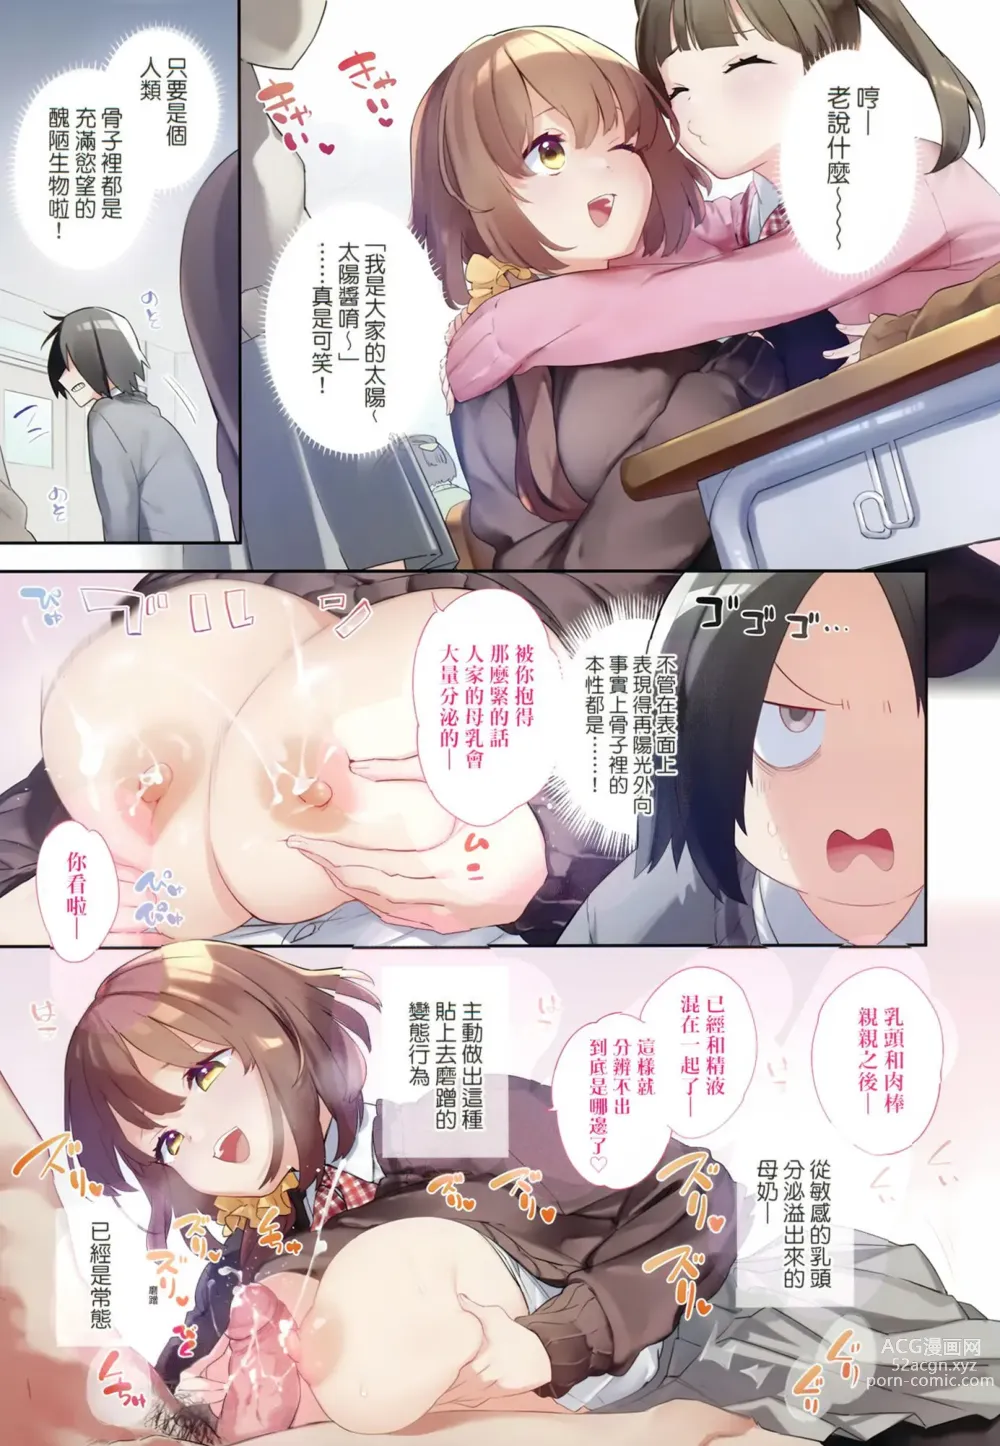 Page 5 of manga 好色女子祕蜜求愛紀錄 (decensored)